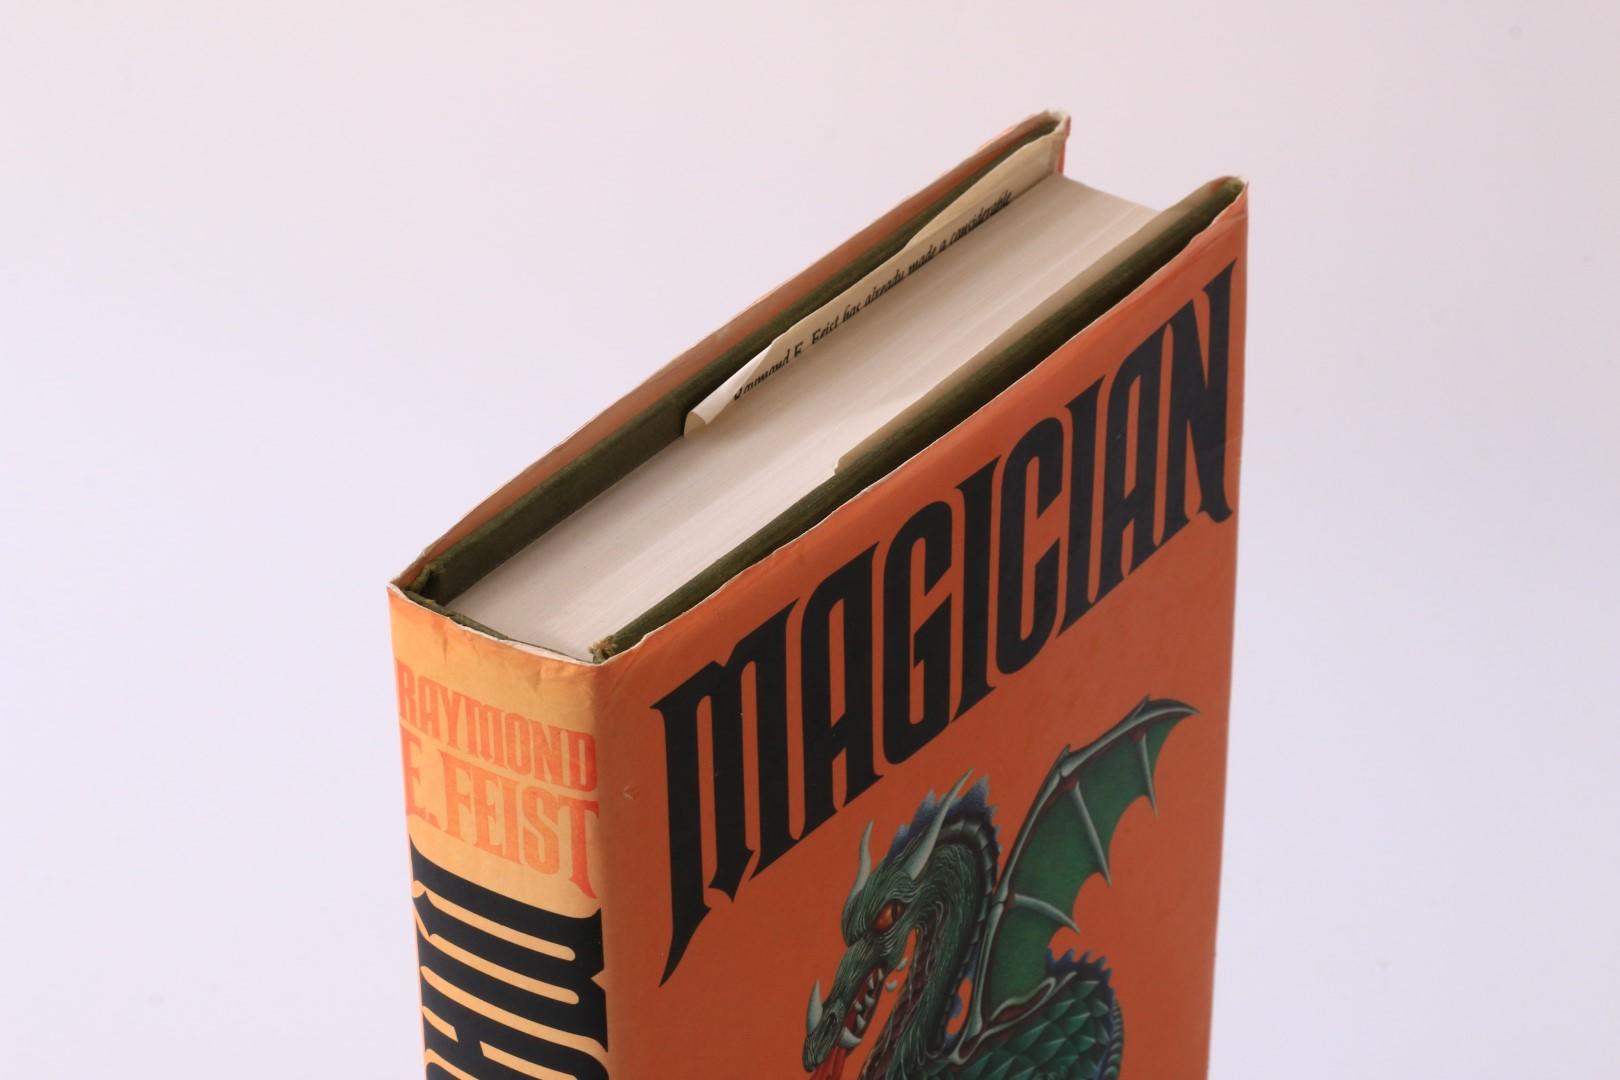 Raymond E. Feist - Magician - Granada, 1983, First Edition.